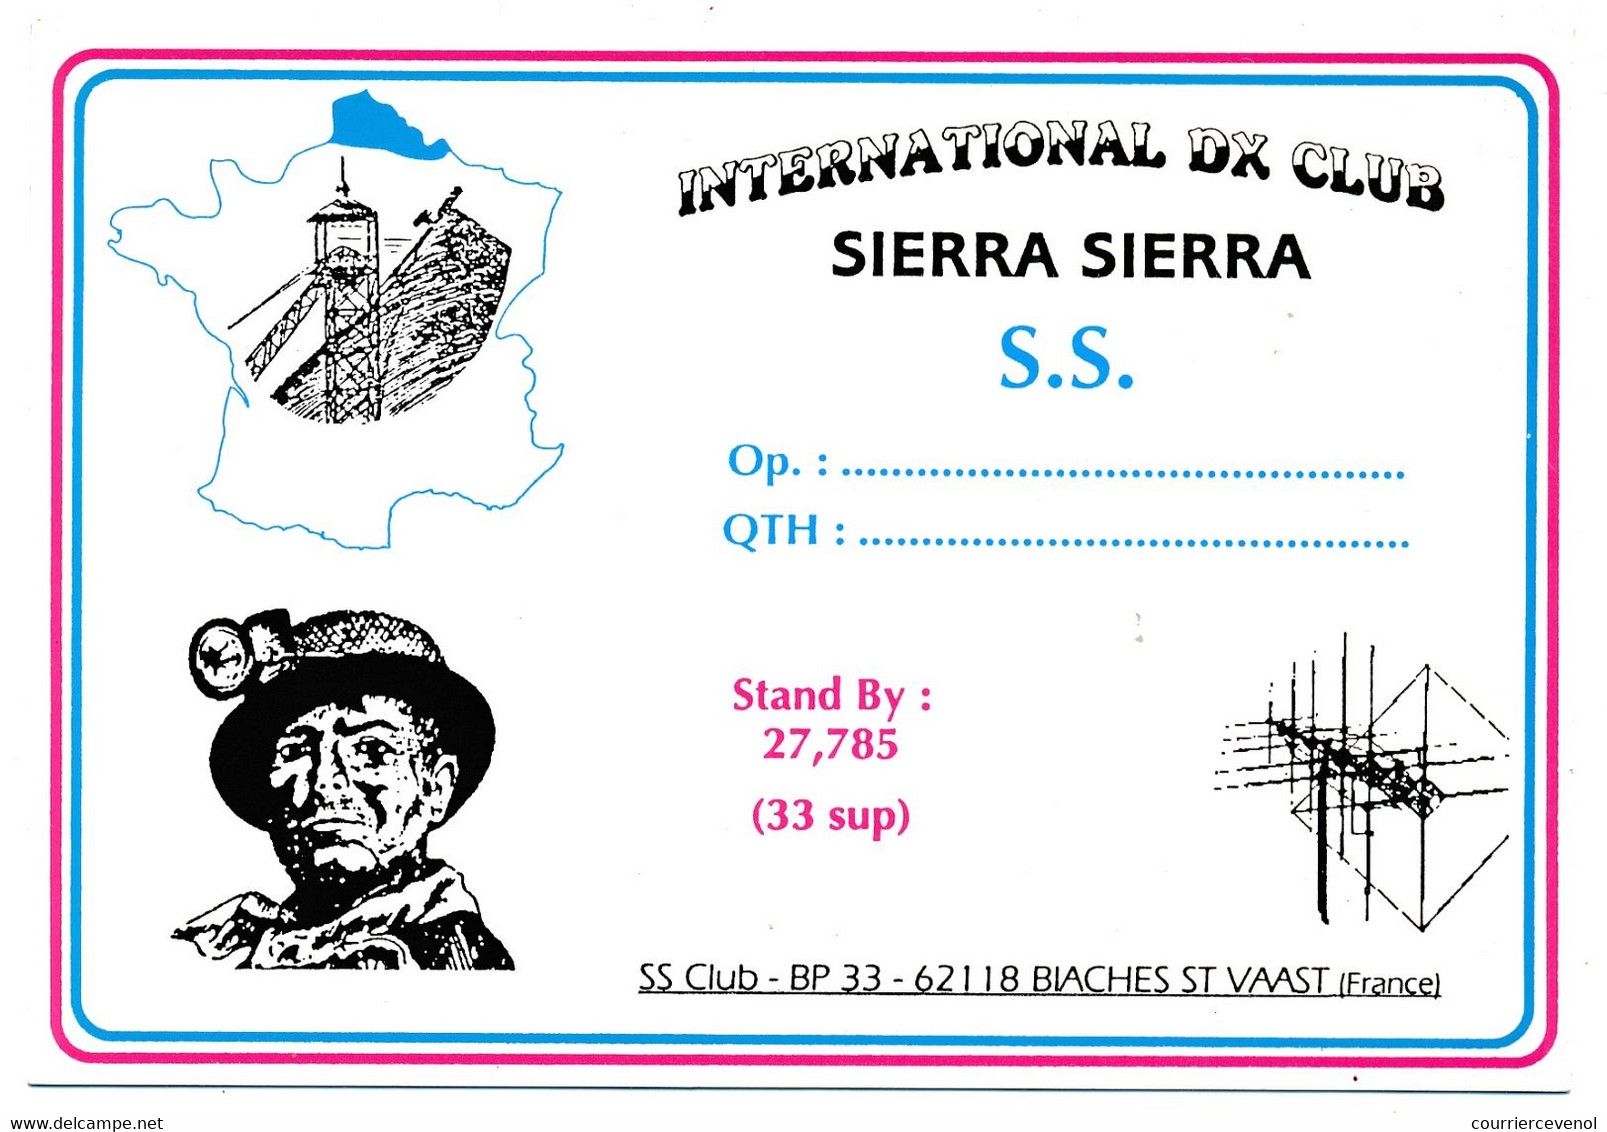 FRANCE - Carte Radio-amateur - FRANCE / BIACHES ST VAAST - International DX Club Sierra Sierra - Neuve - Radio Amateur